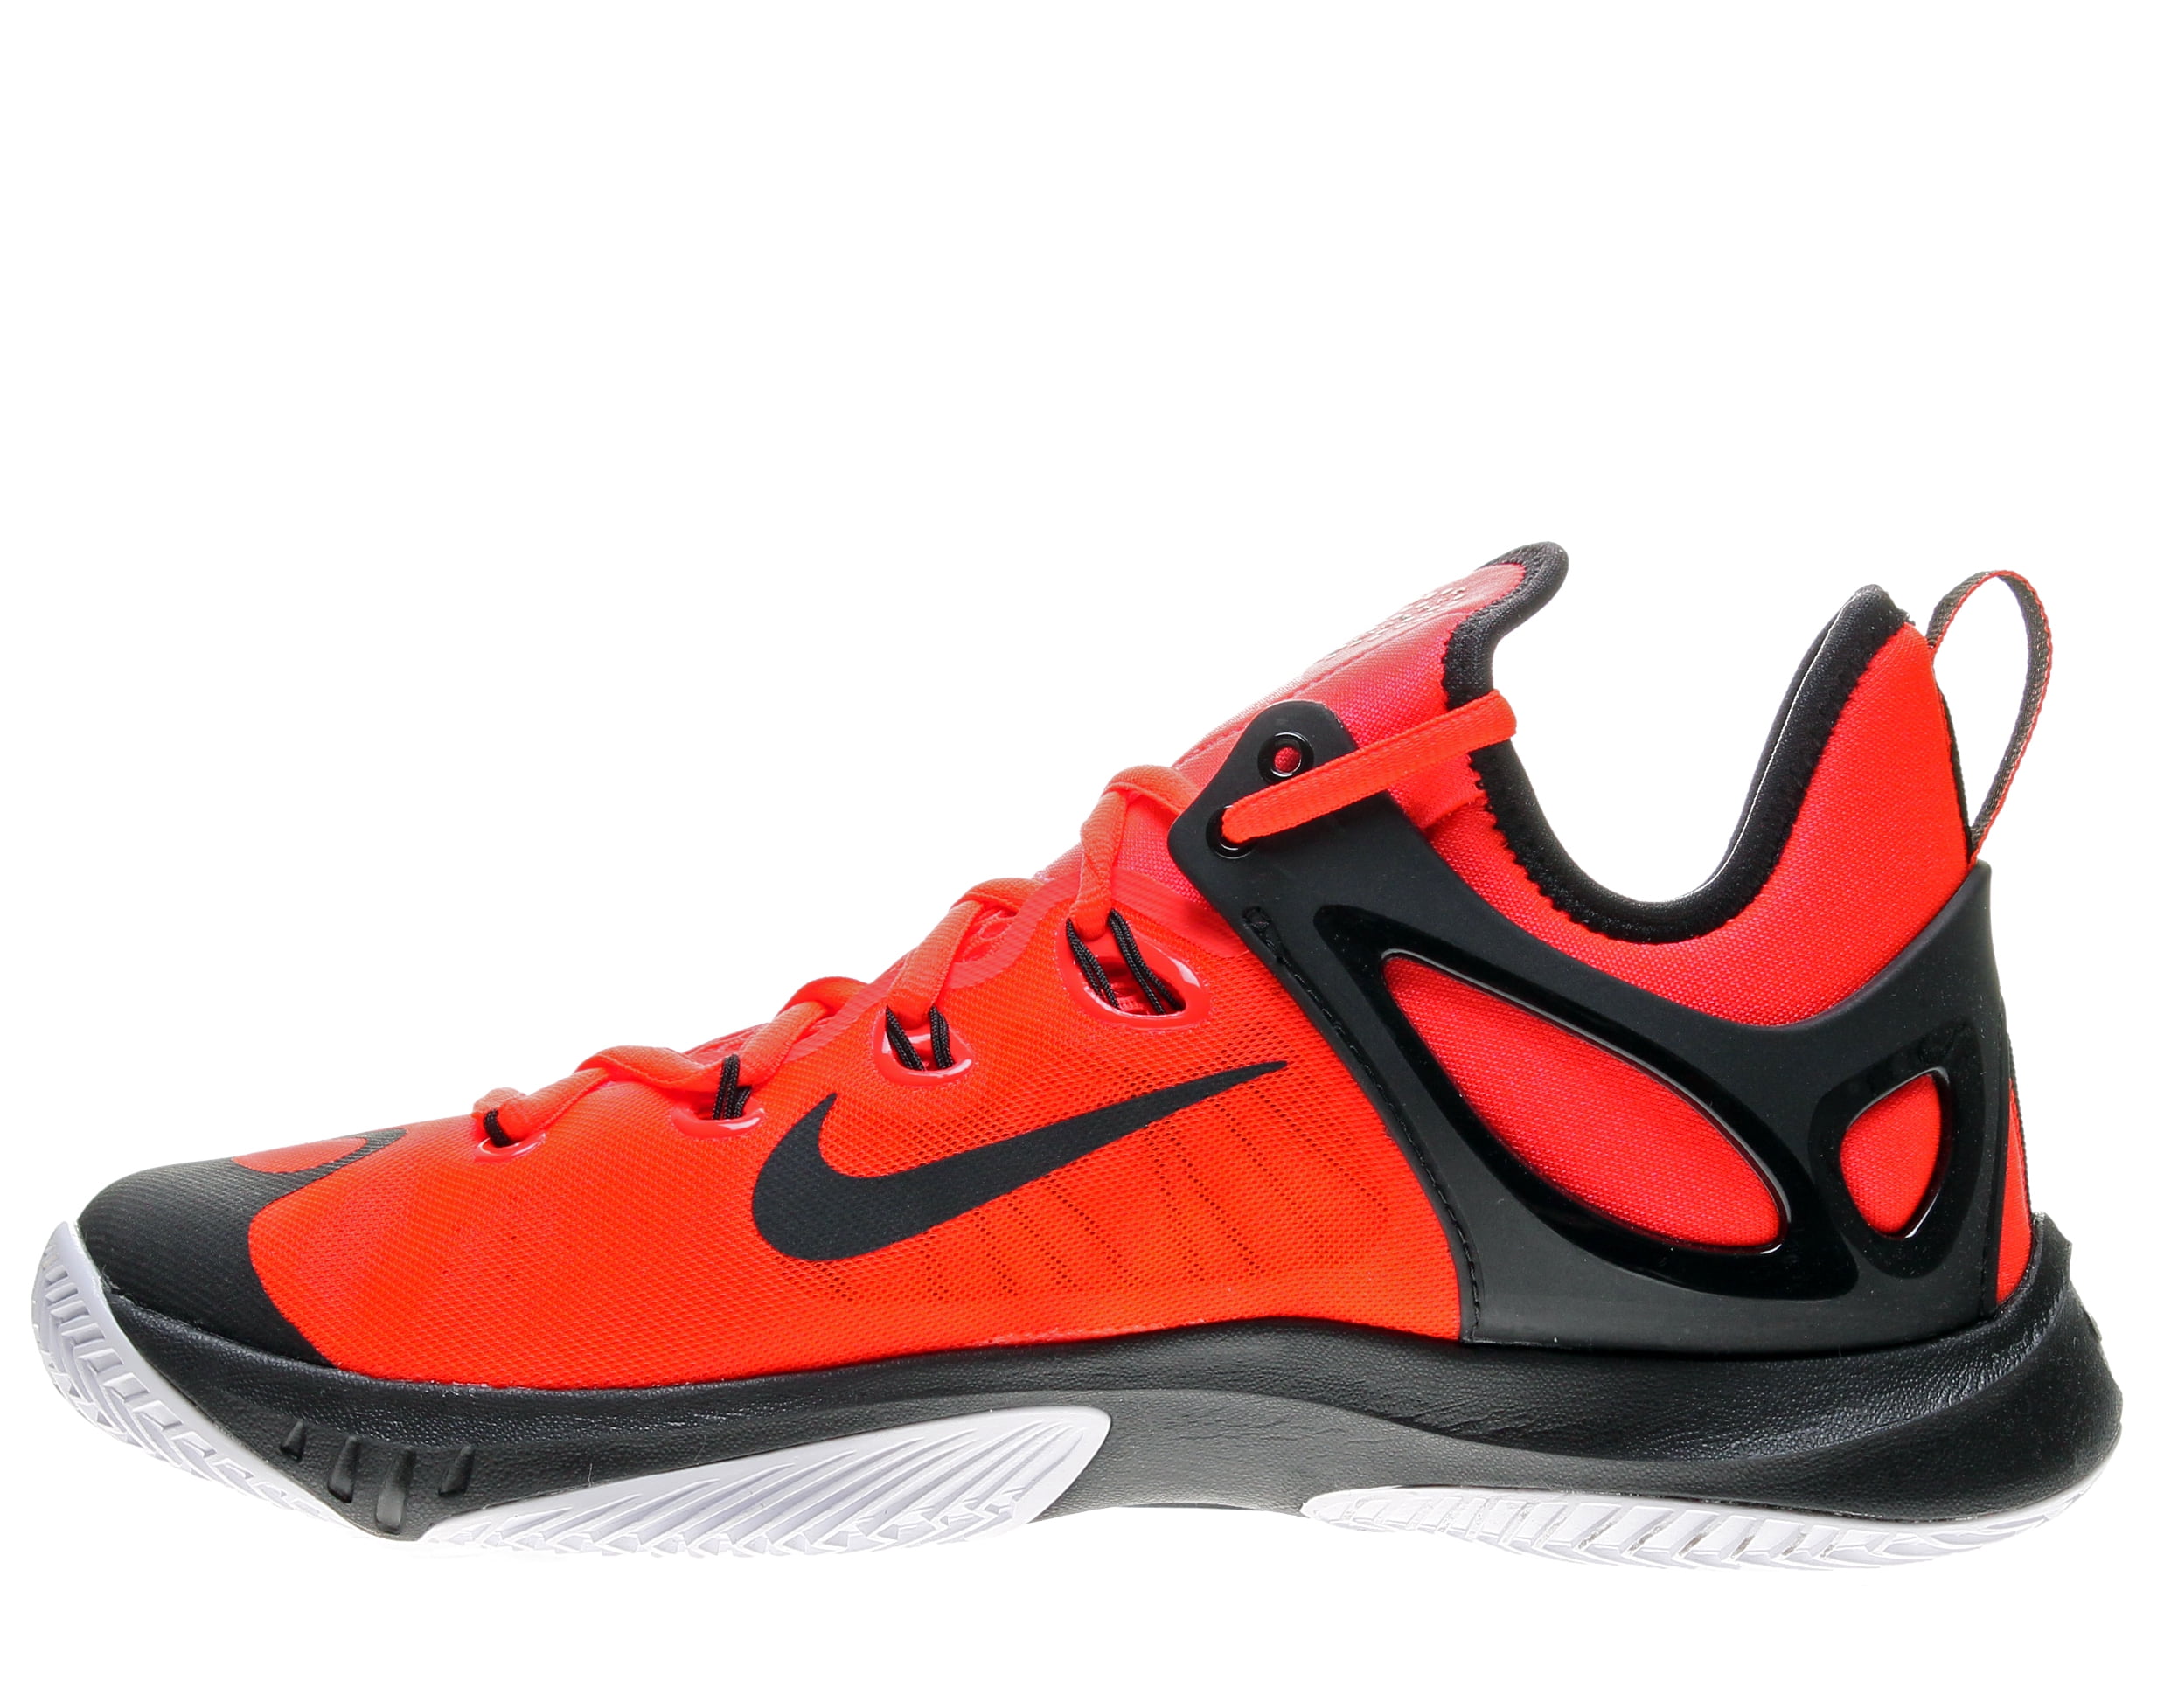 Empirical sponsored Job offer Nike Zoom HyperRev 2015 Men's Basketball Shoes Size 10.5 - Walmart.com